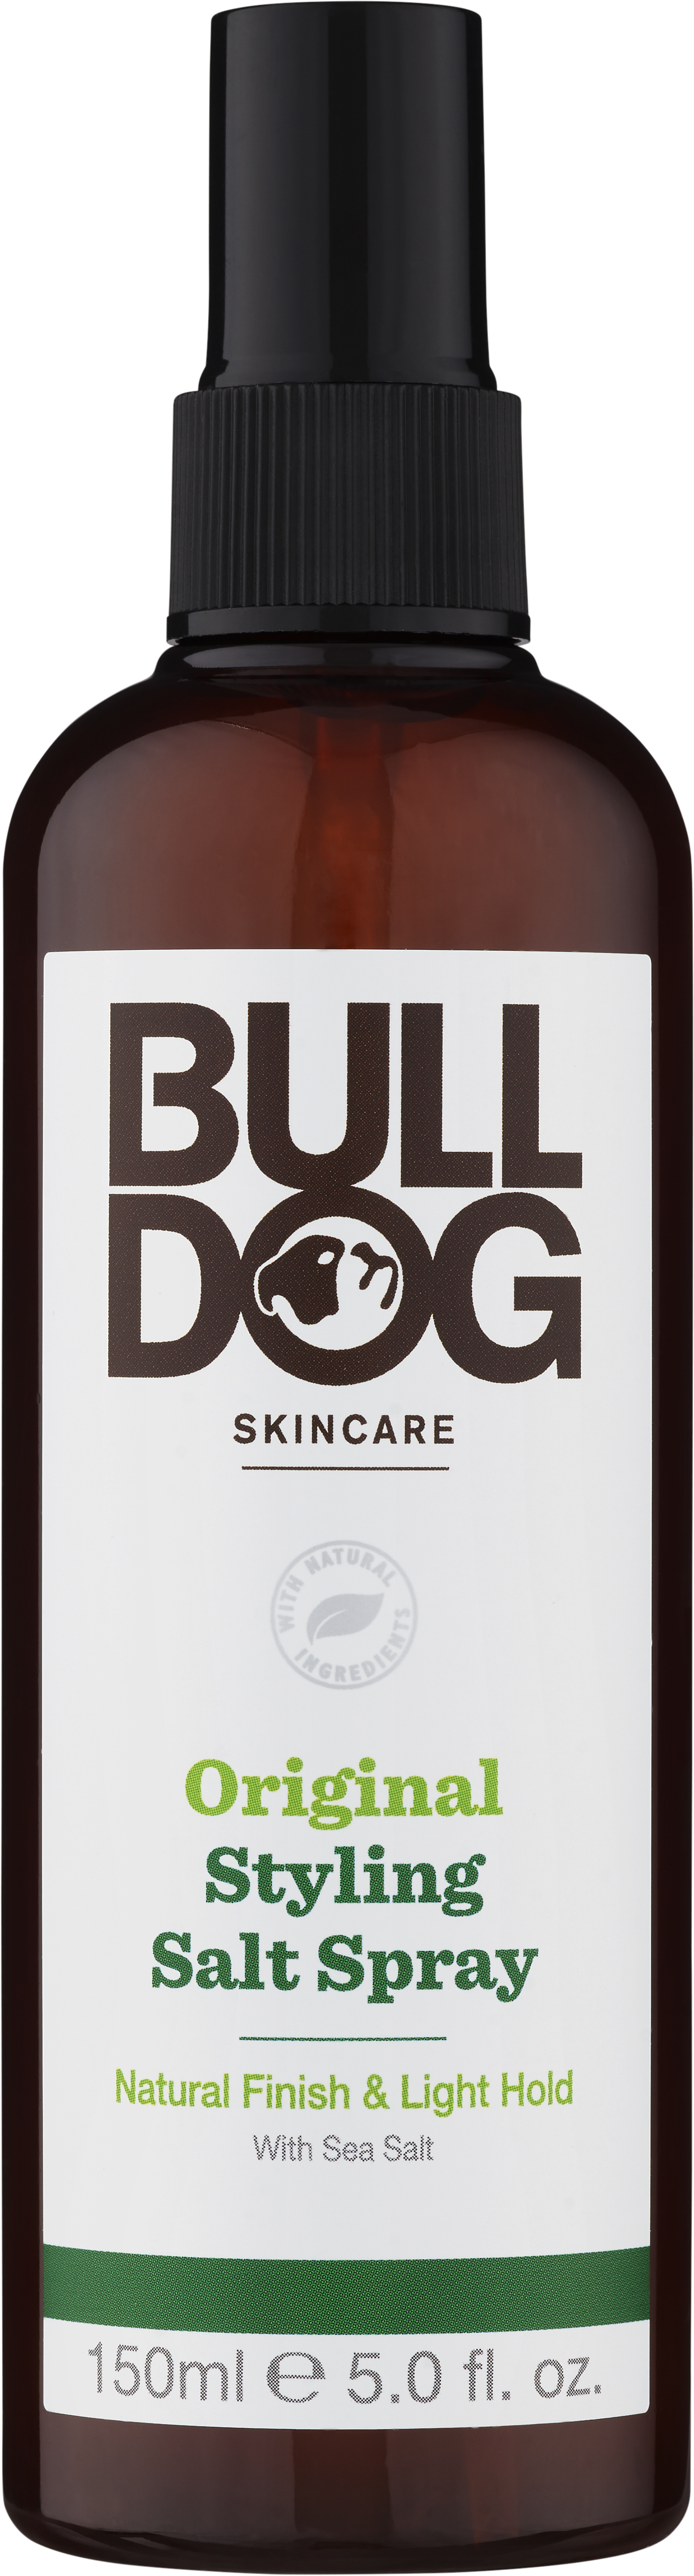 Bulldog Original styling salt spray 150 ml